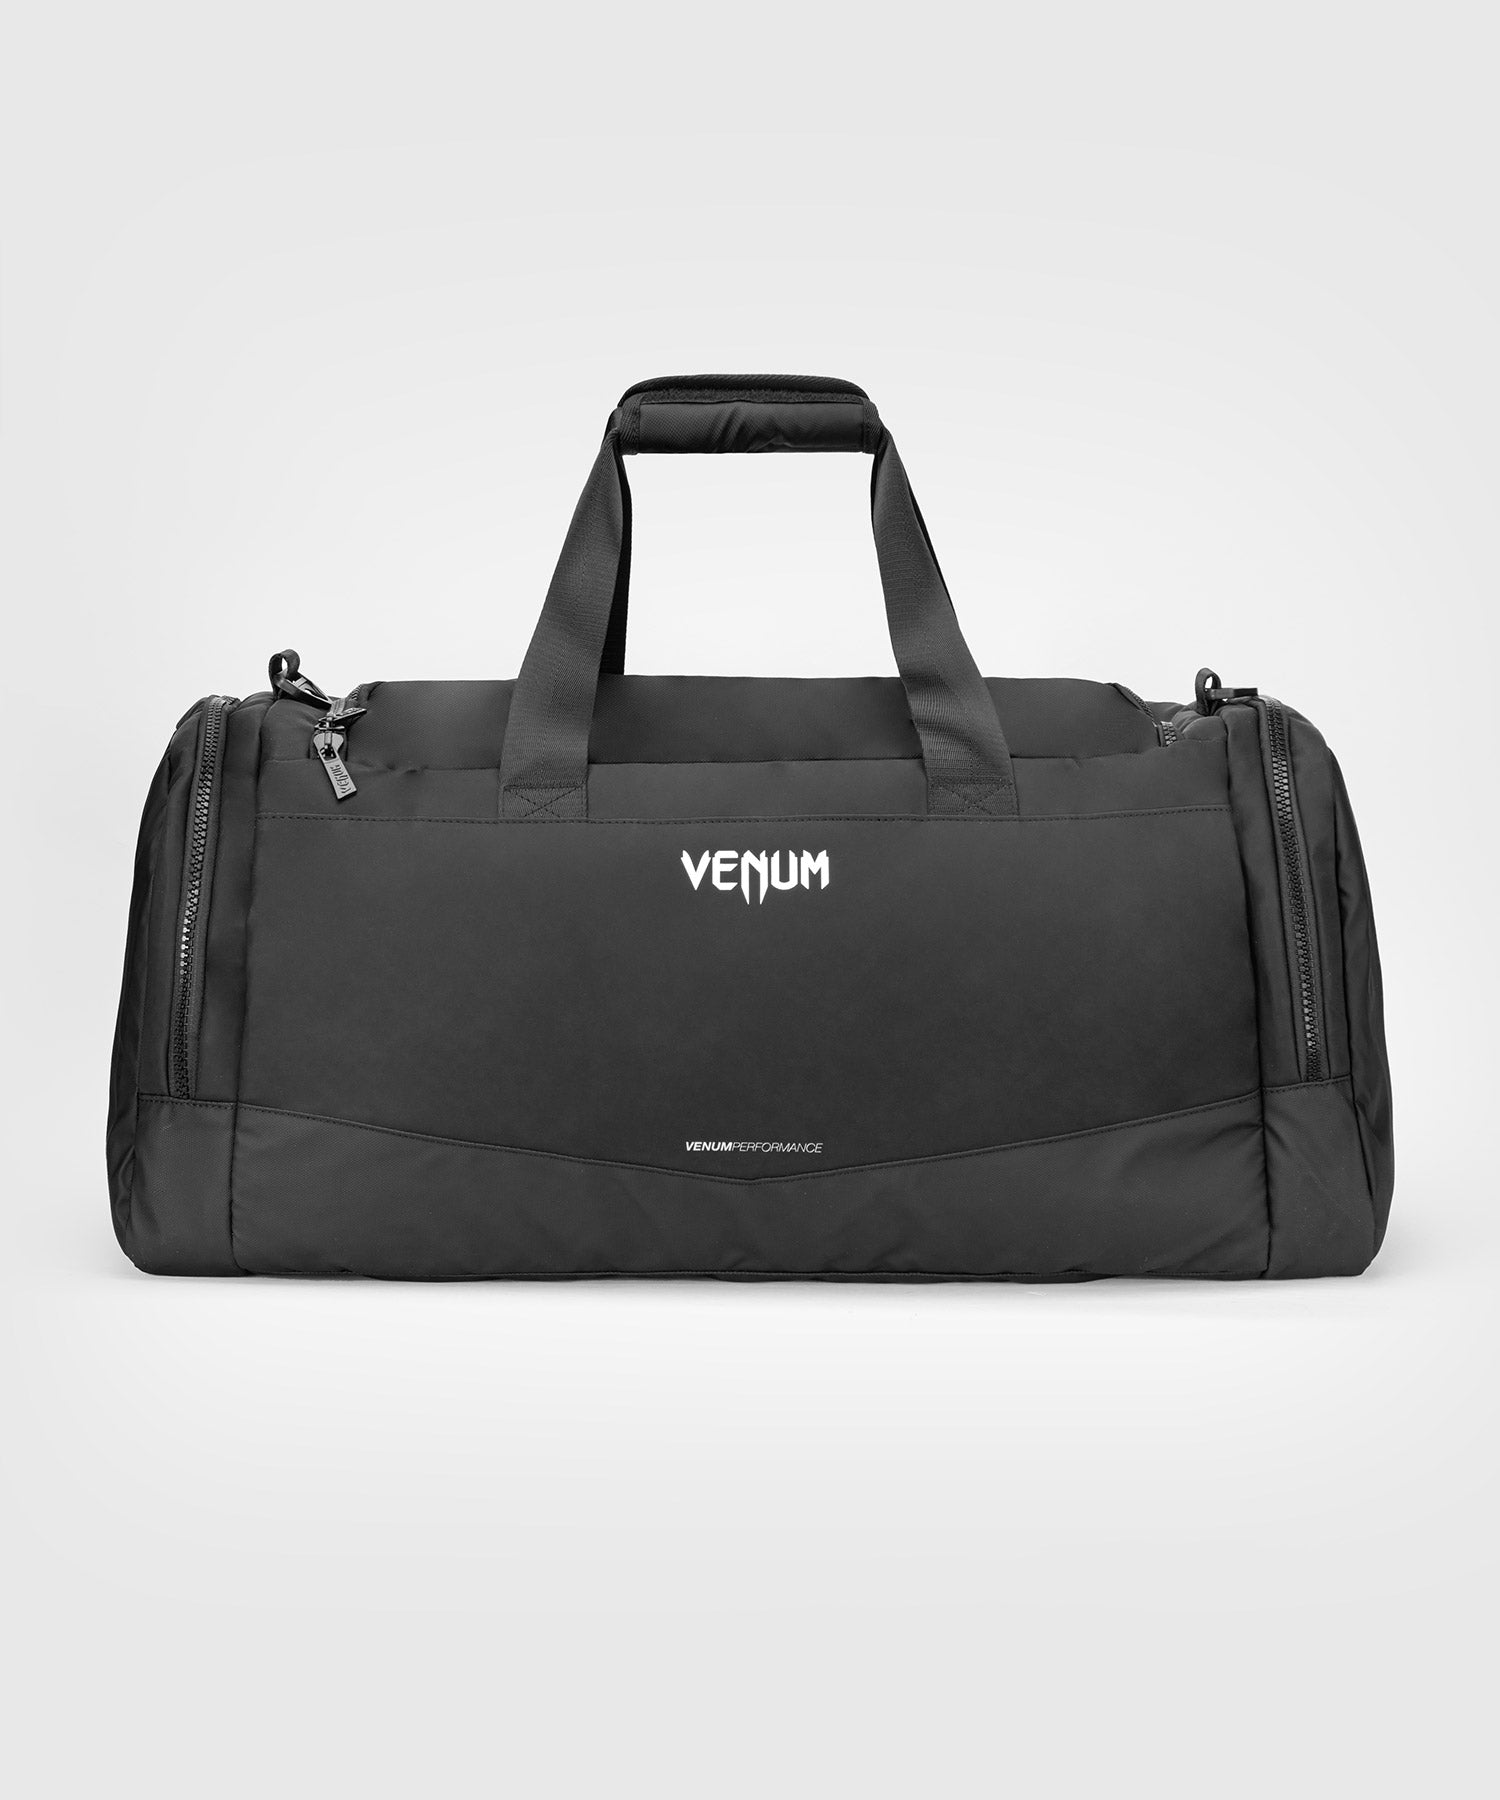 Sports bag Venum Evo 2 Trainer Lite